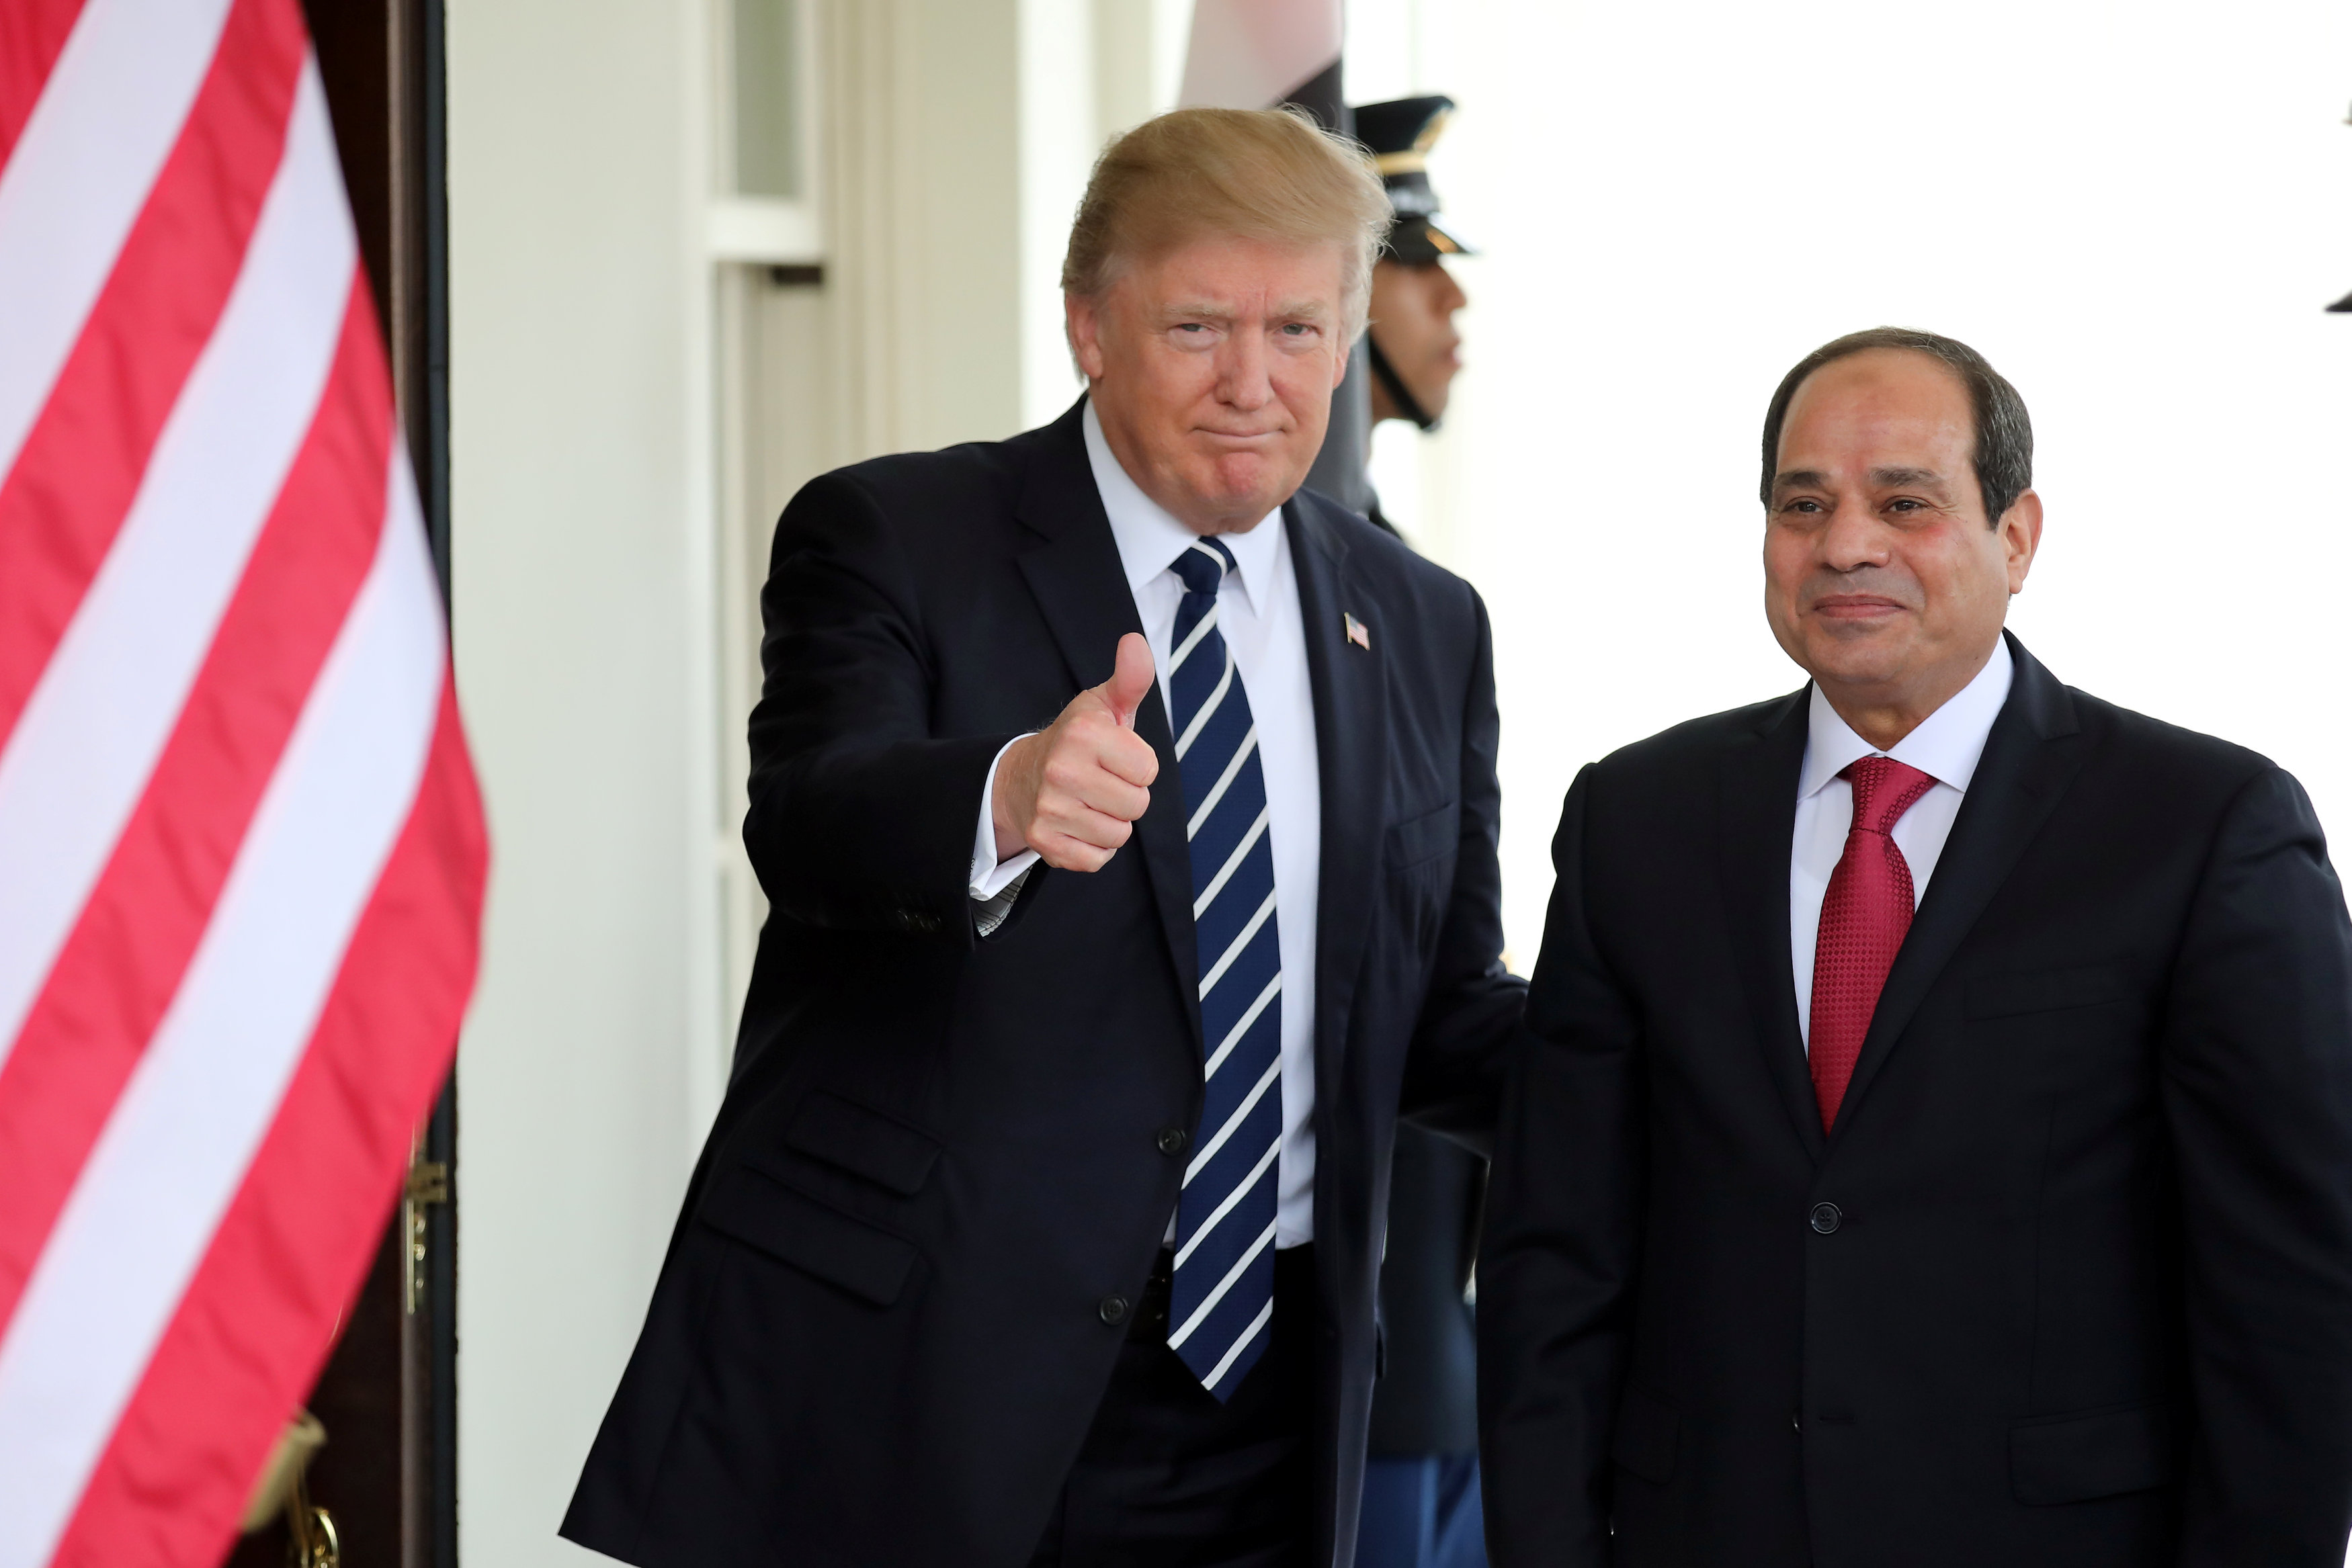 U.S. President Donald Trump welcomes Egypt's President Abdel Fattah al-Sisi at the White House in Washington, U.S., April 3, 2017. REUTERS/Carlos Barria